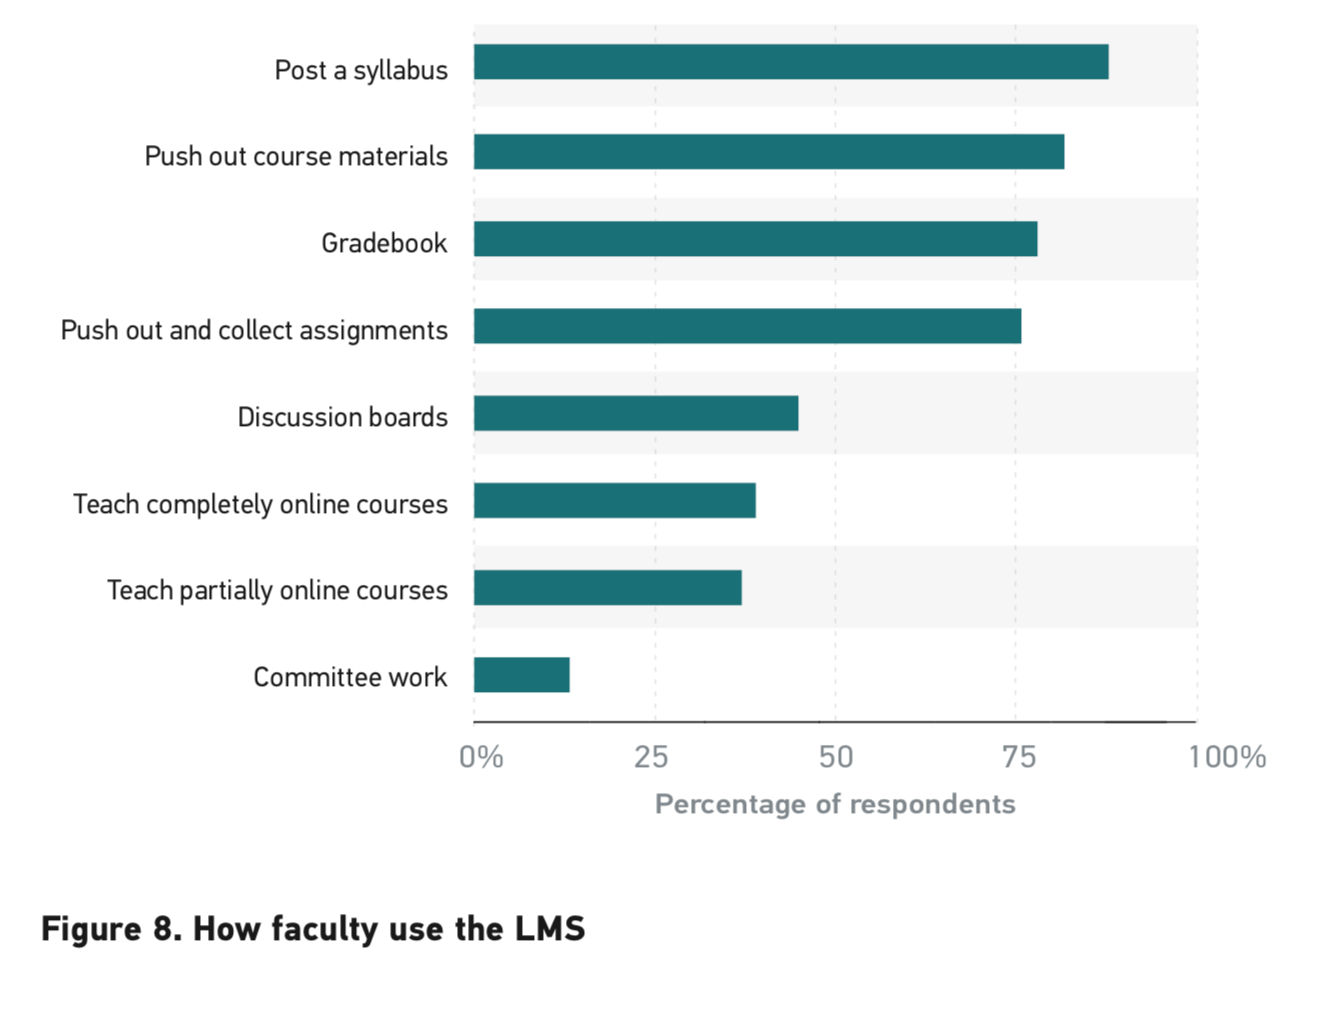 ECAR data on faculty LMS usage